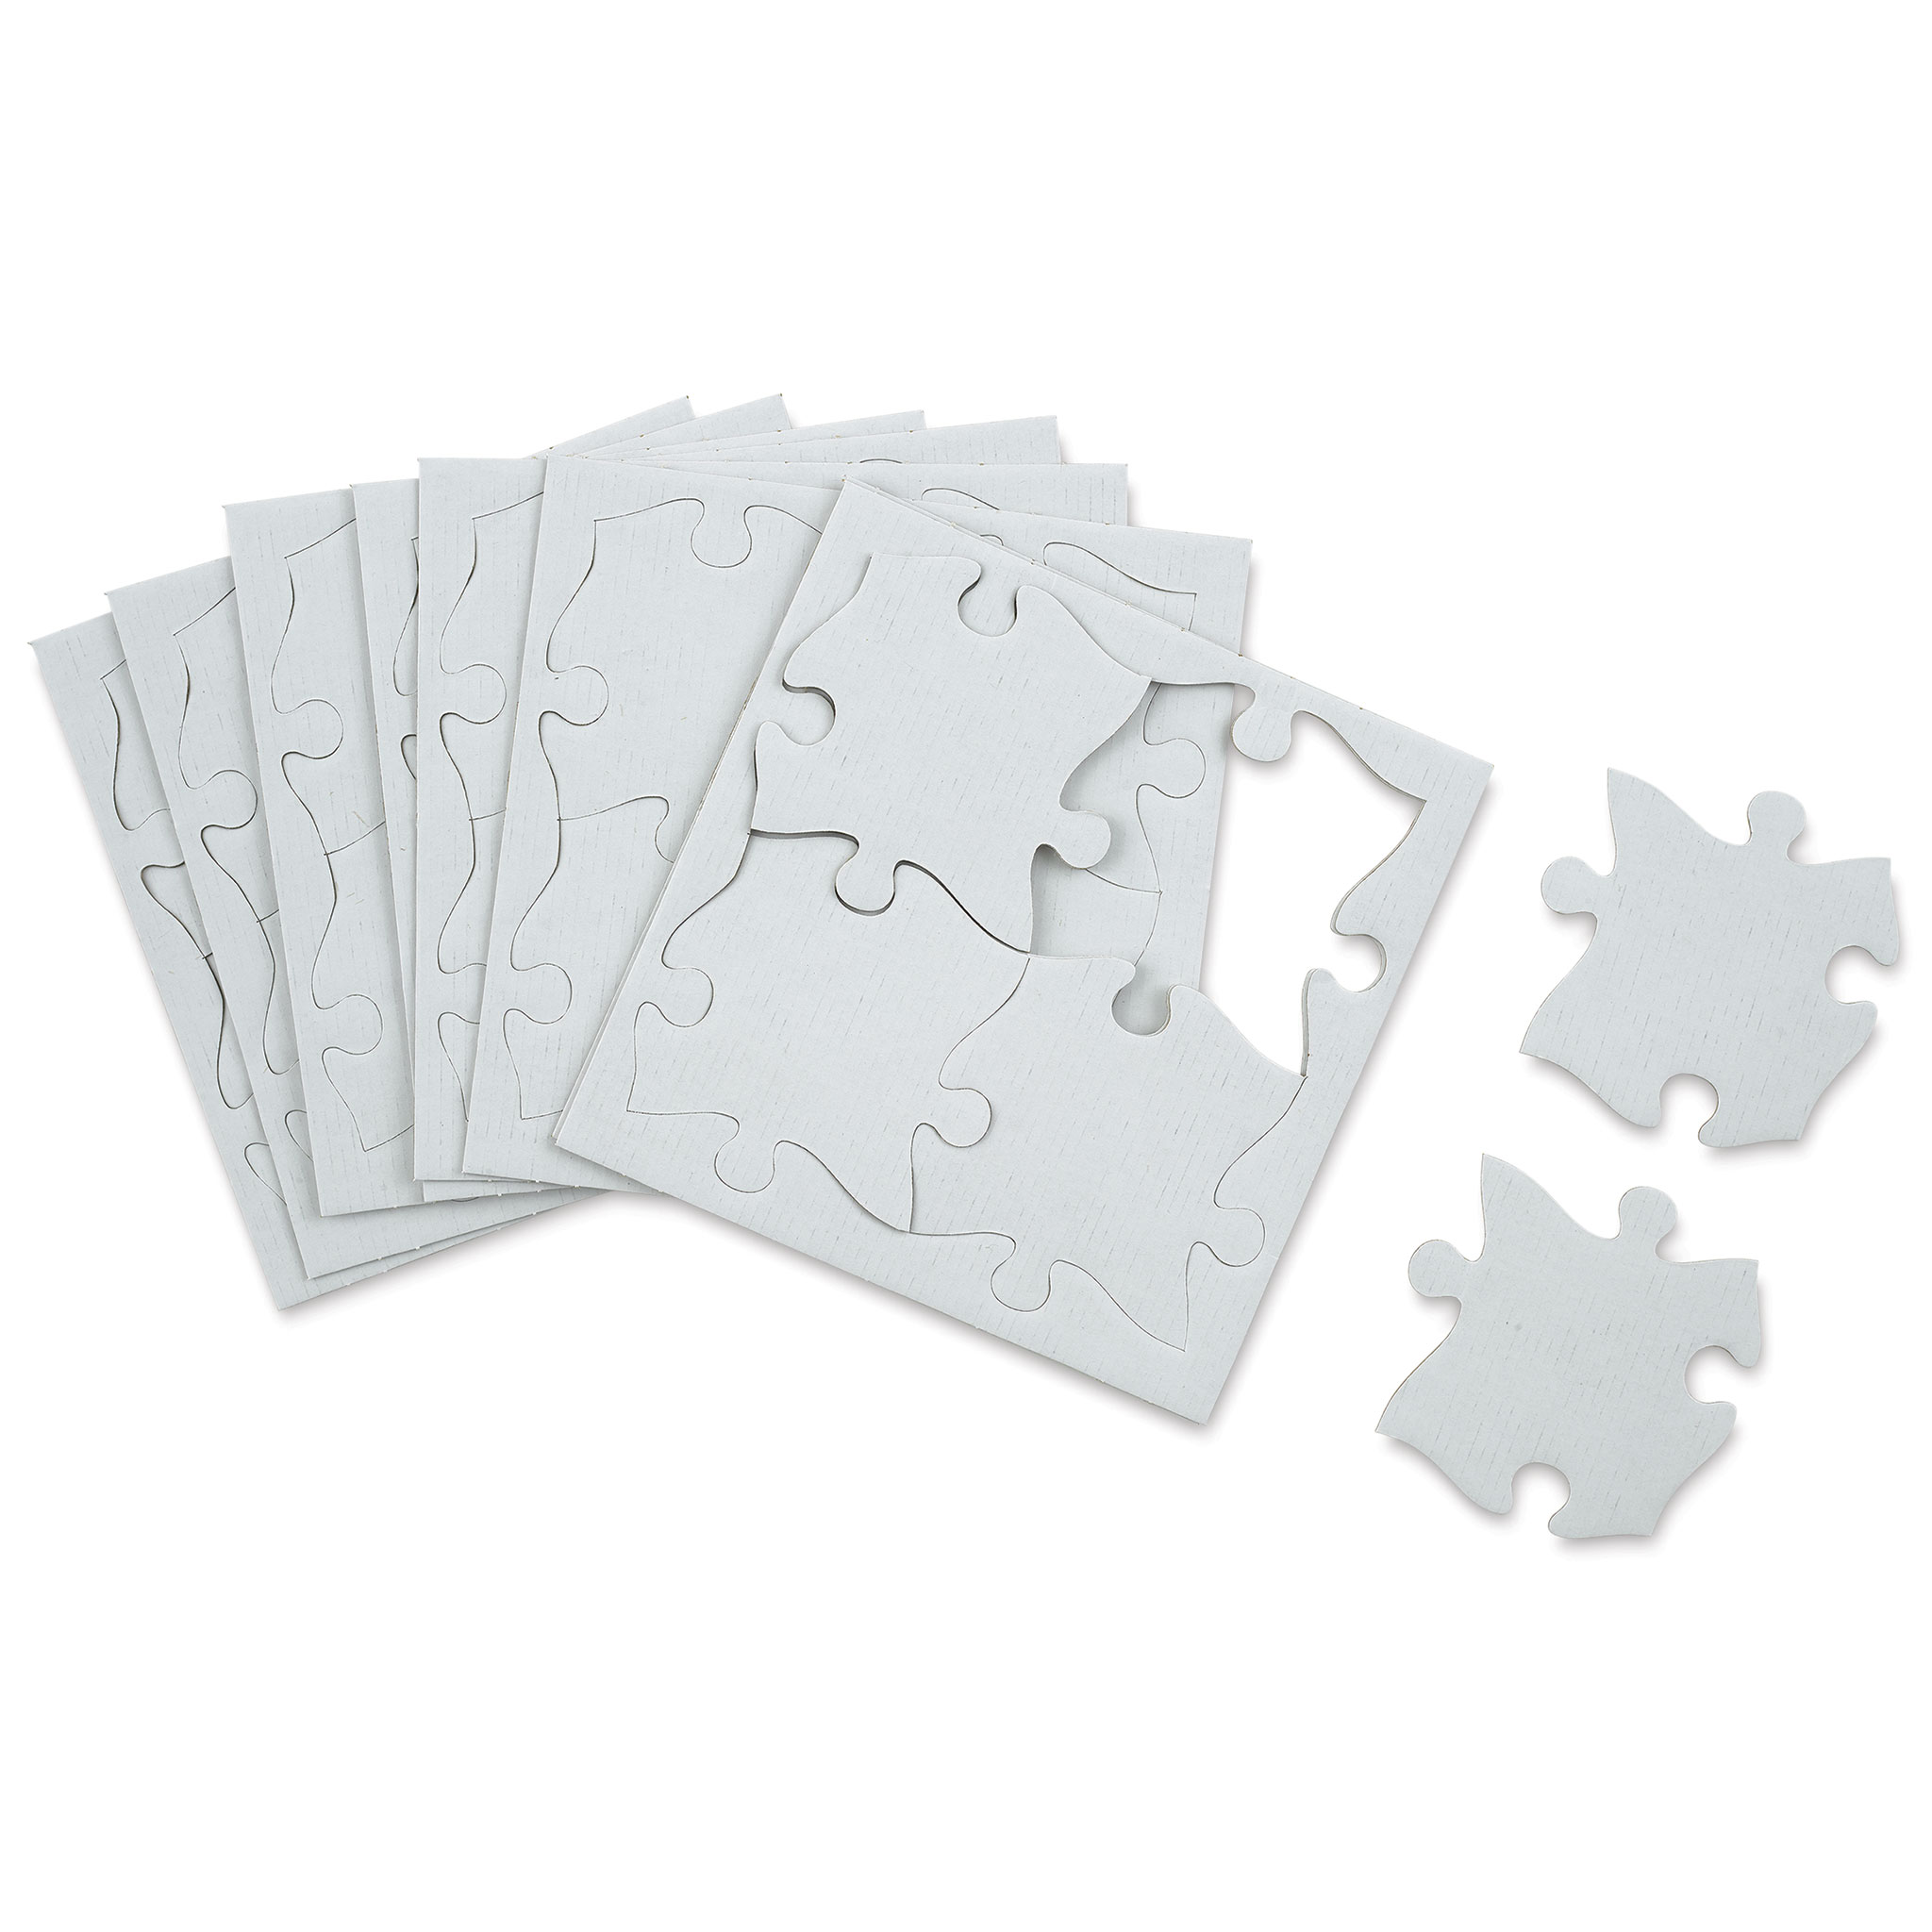 Roylco Blank Puzzle Pieces - 4 x 4, Pkg of 32